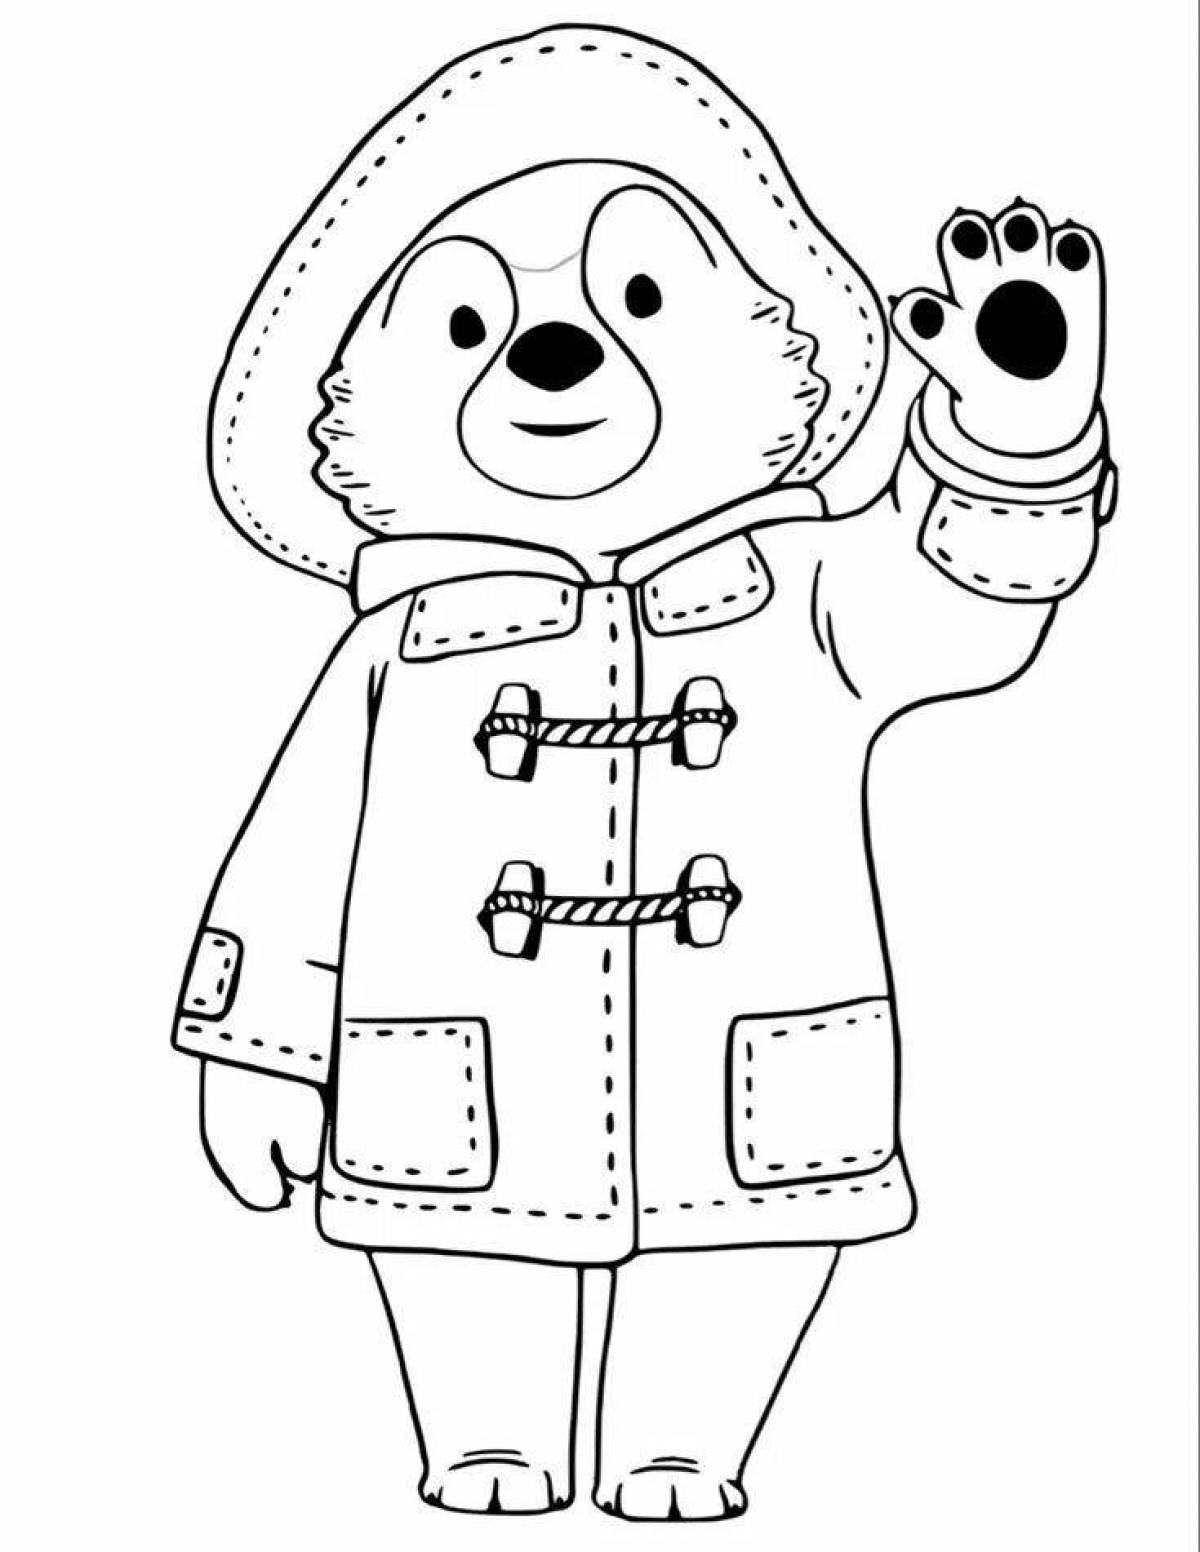 Paddington bear coloring book